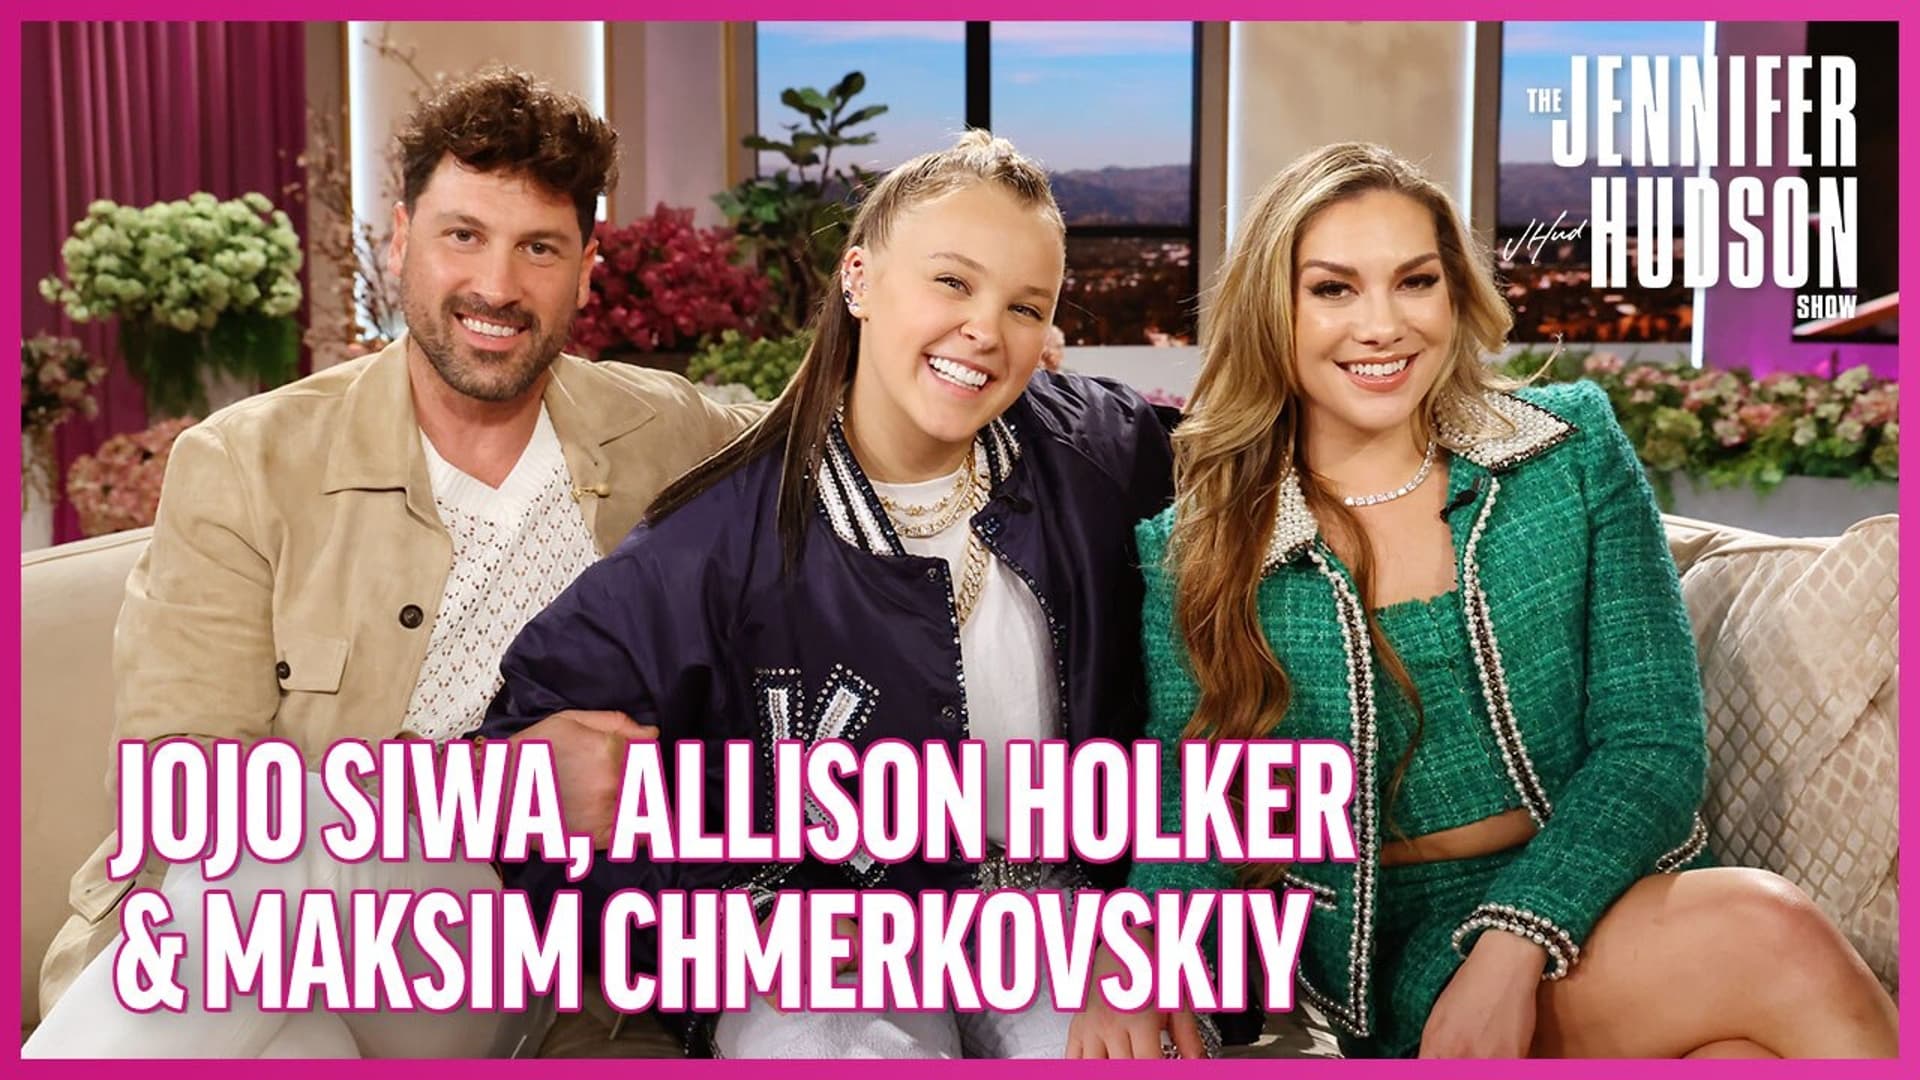 The Jennifer Hudson Show Season 2 :Episode 105  JoJo Siwa, Allison Holker & Maksim Chmerkovskiy